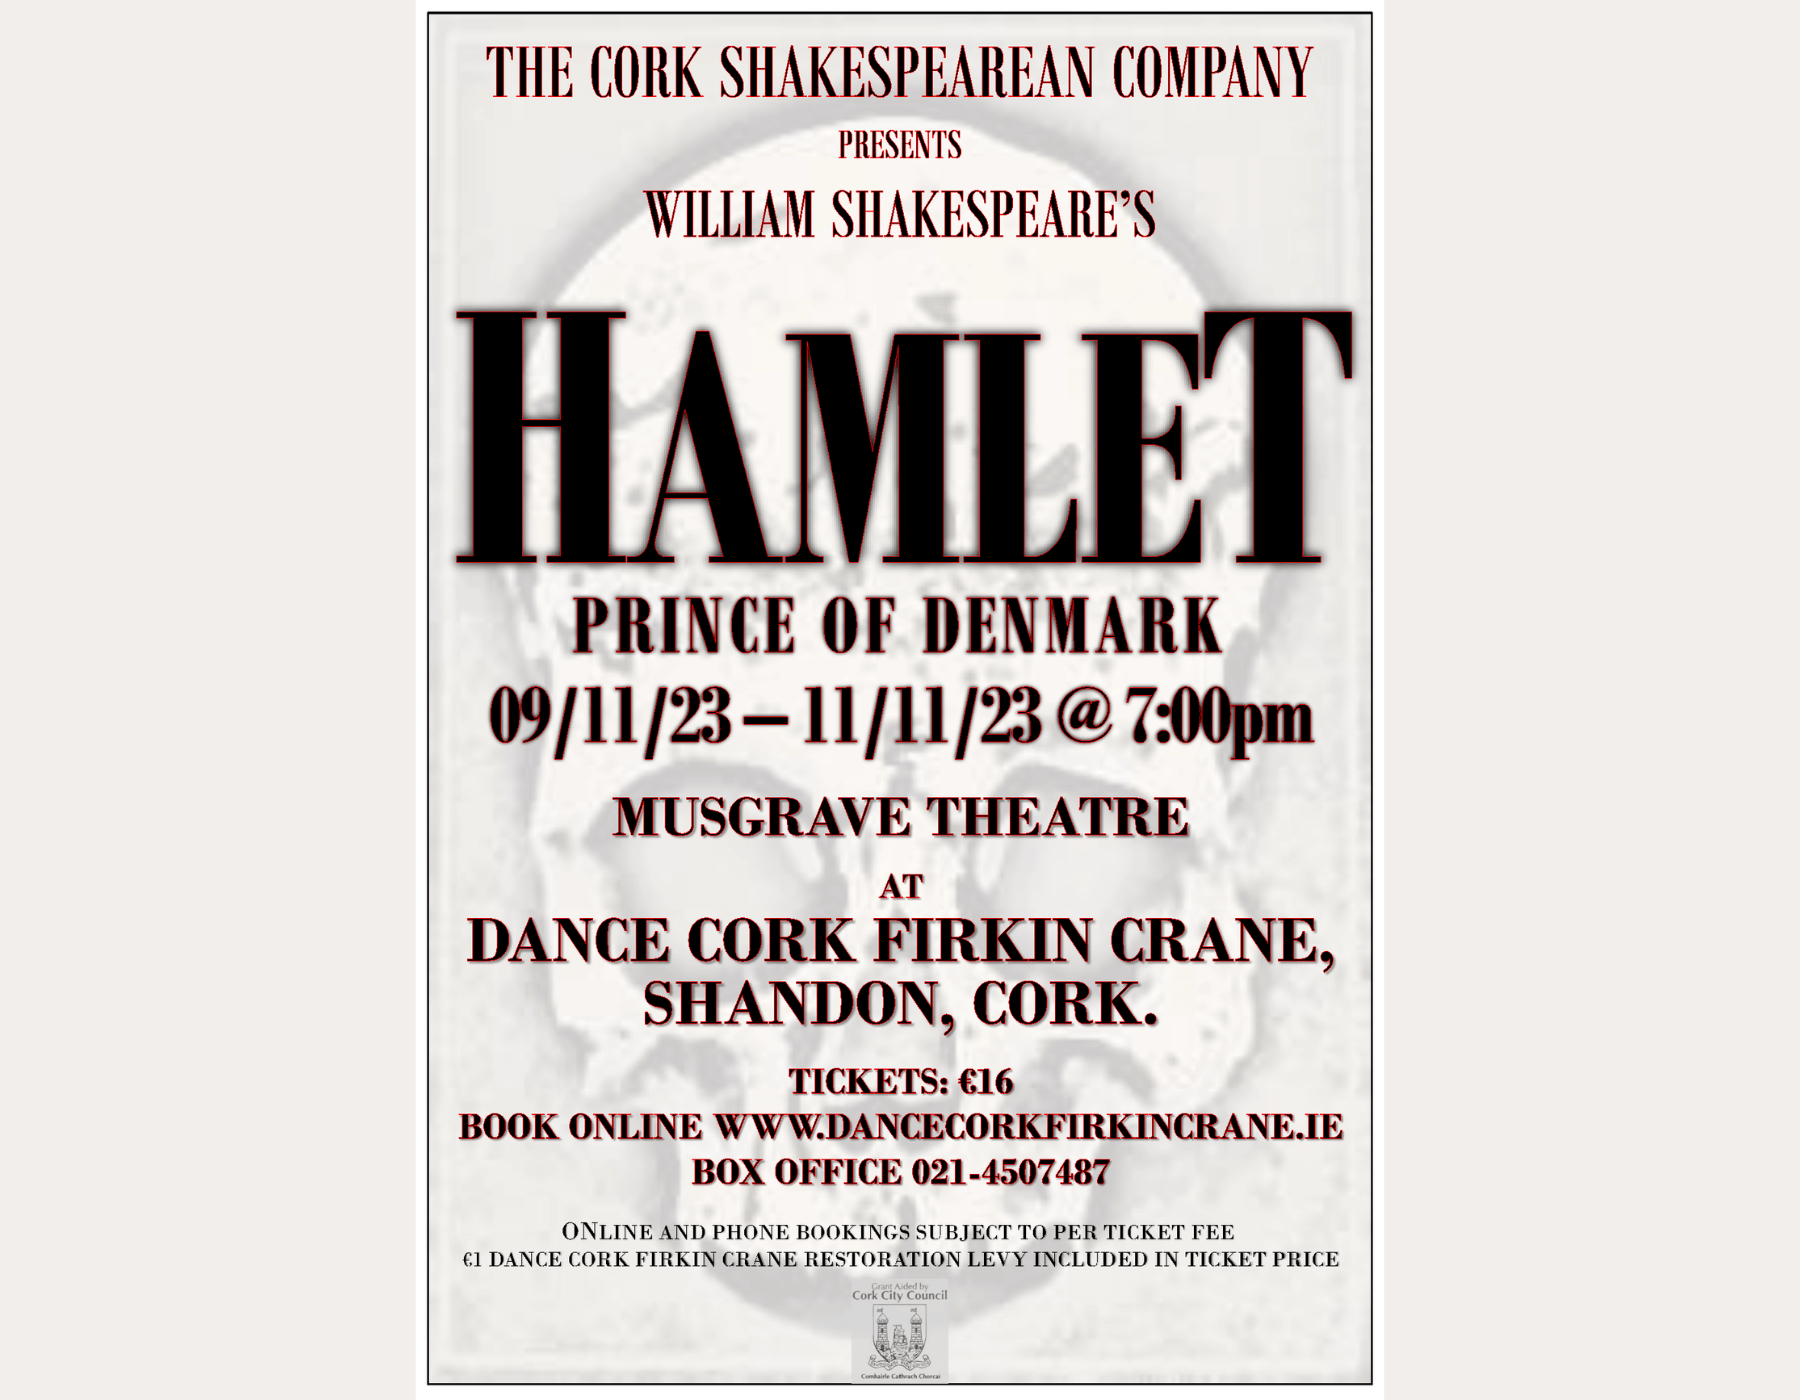 Firkin Crane Theatre, Cork: Hamlet by the Cork Shakespearean Company